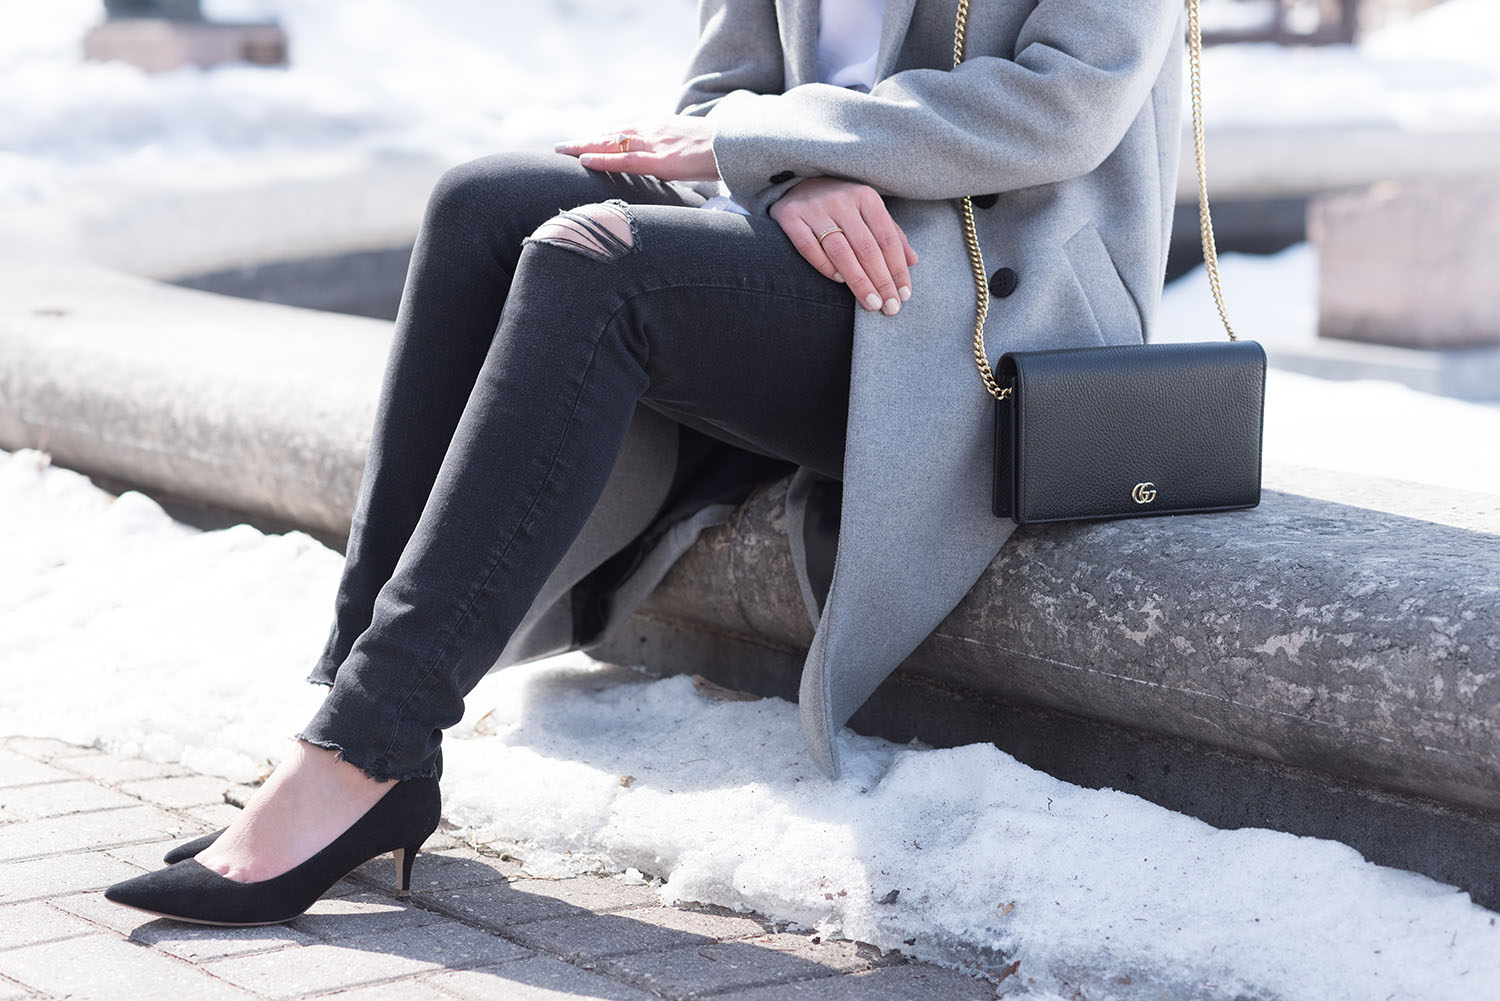 Outfit details on Winnipeg fashion blogger Cee Fardoe of Coco & Vera, including Mavi skinny jeans and Gucci black leather bag